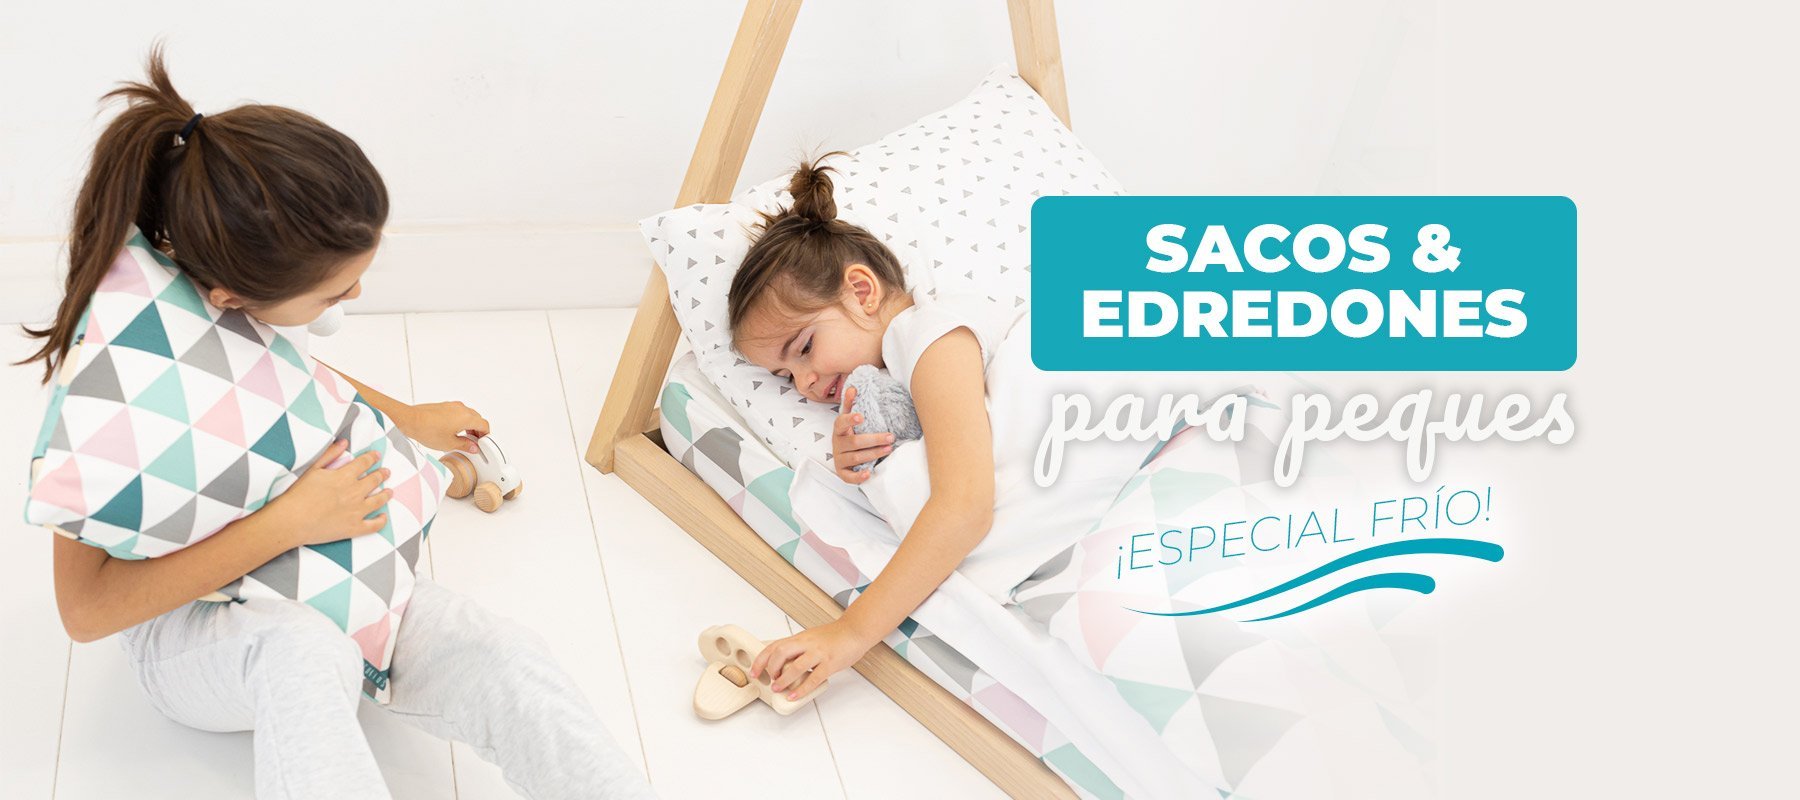 Duerme tranquilo con los edredones ajustables y sacos nórdicos infantiles -  Blog Gauus Blog Gauus